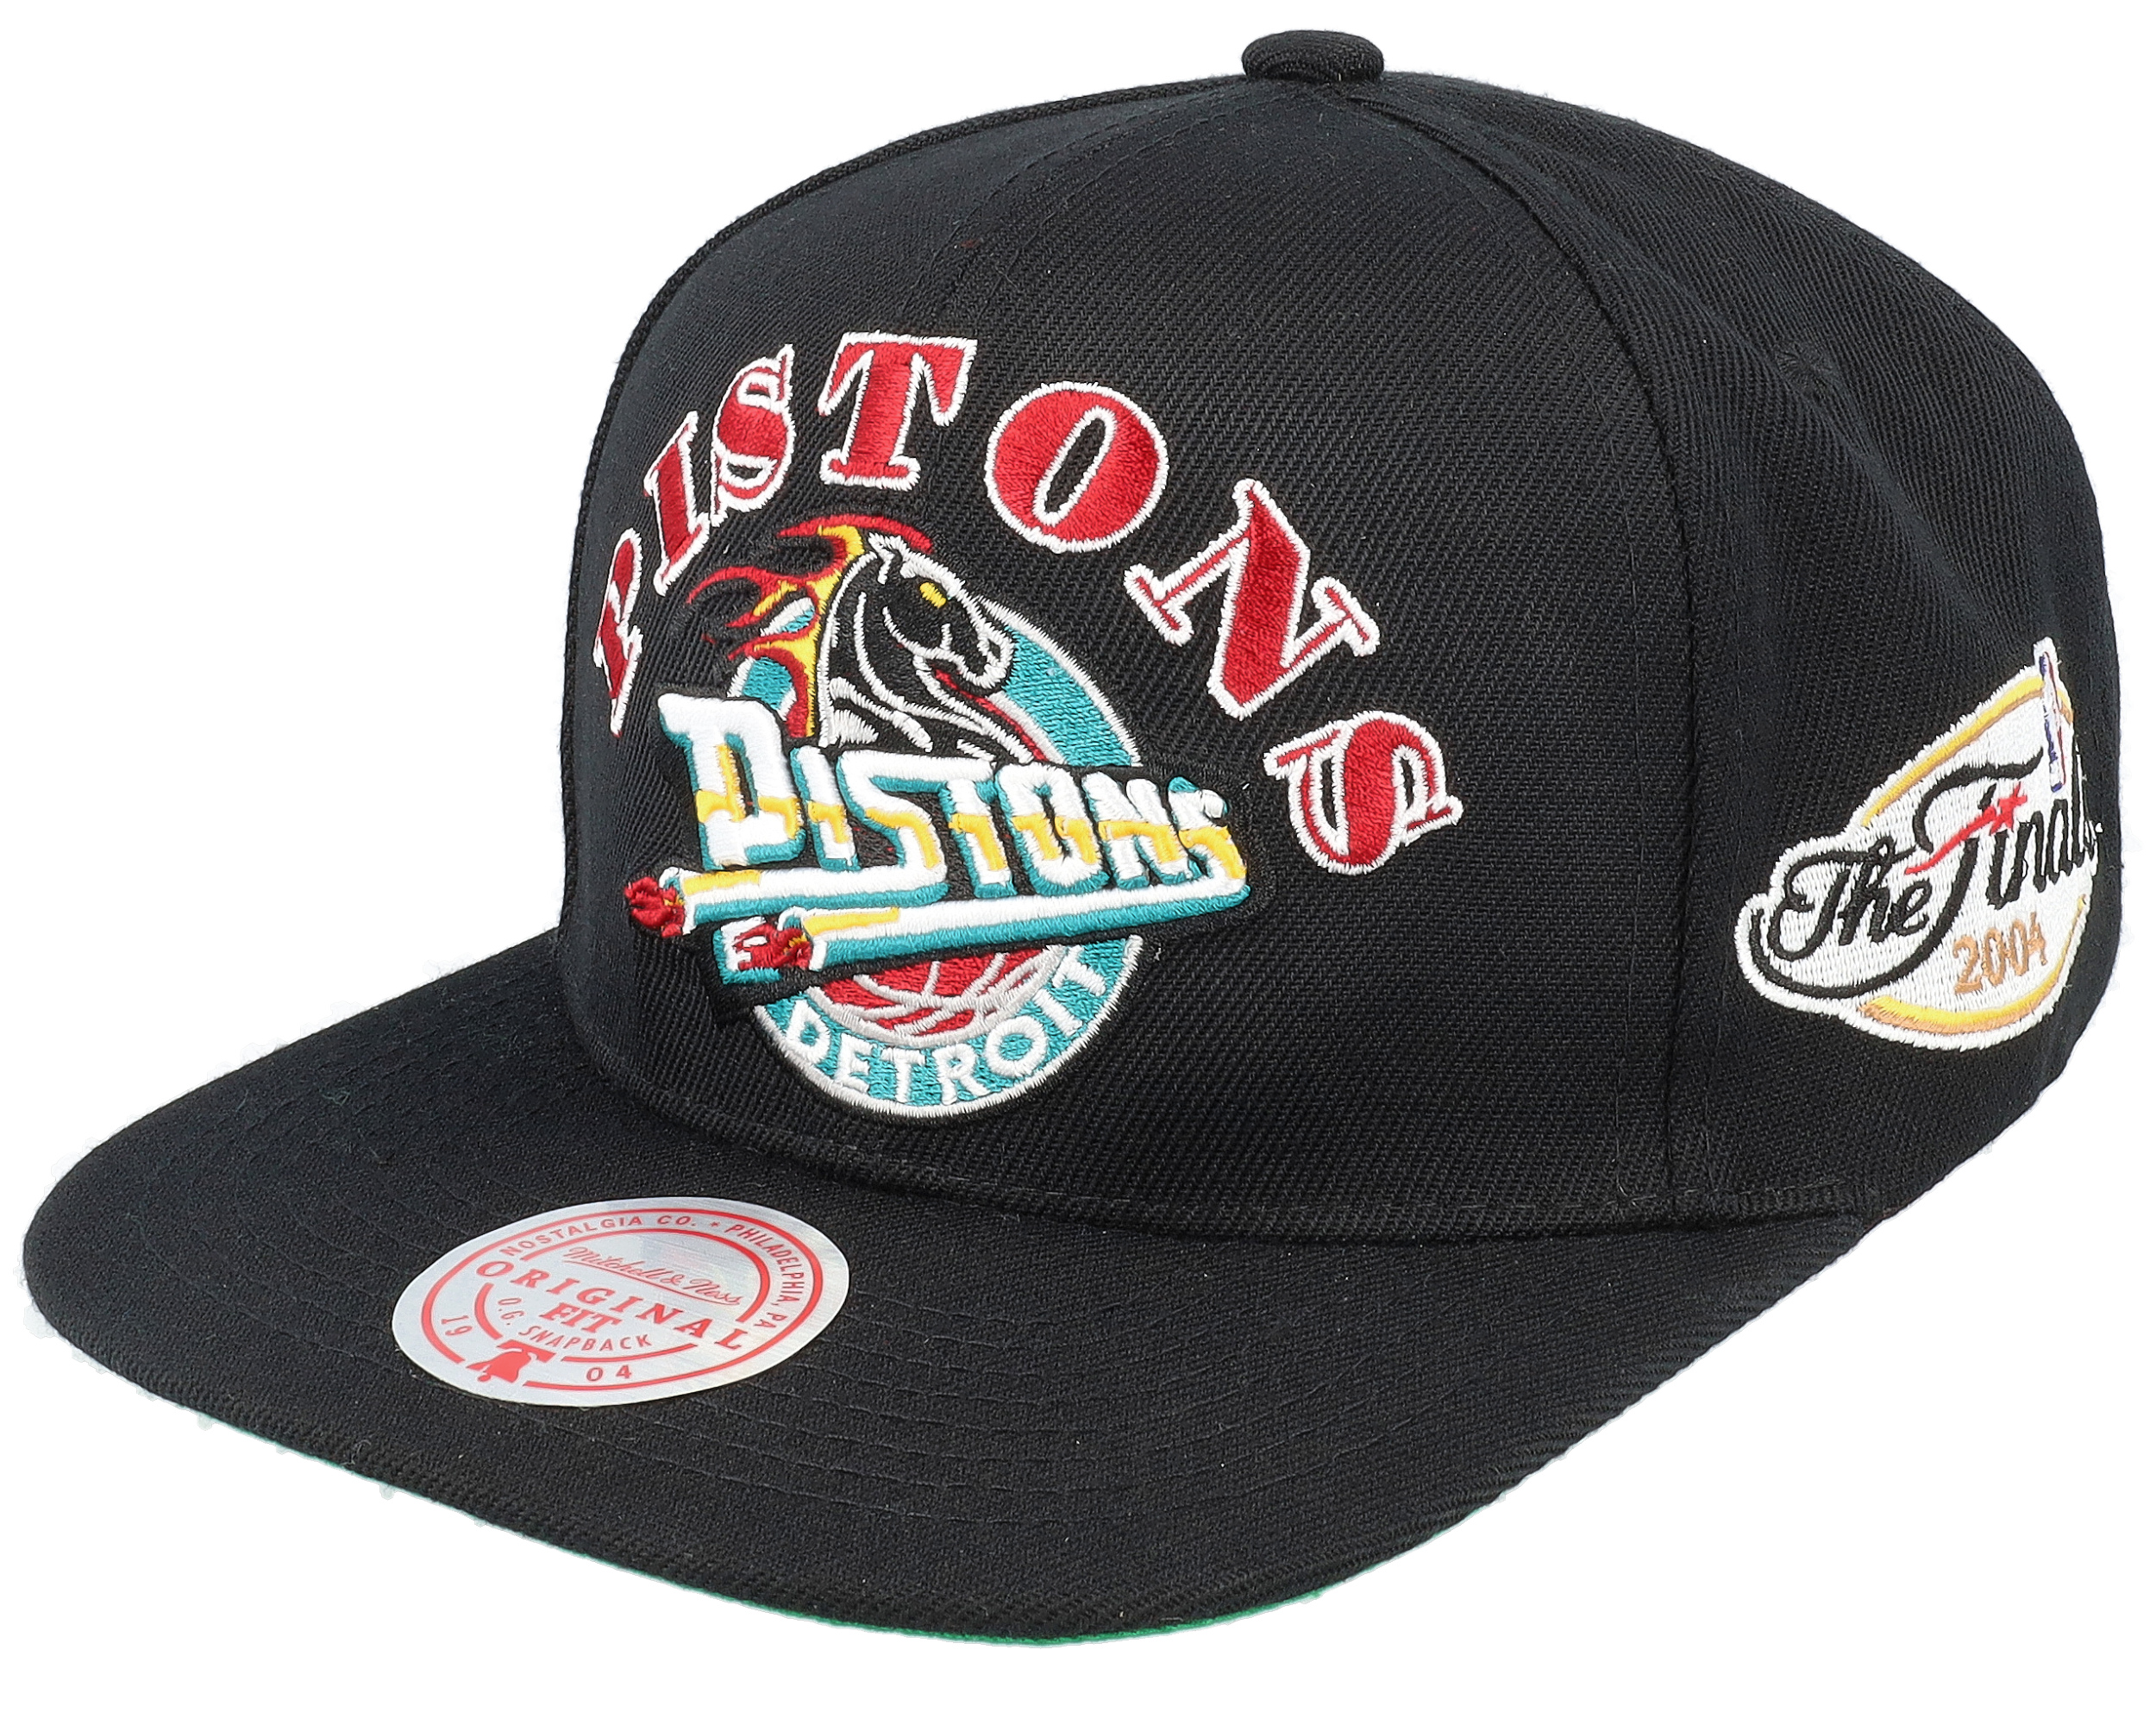 Mitchell & Ness Detroit Pistons NBA Black Pop Snapback Hat Adjustable Cap - Black/Side Patch